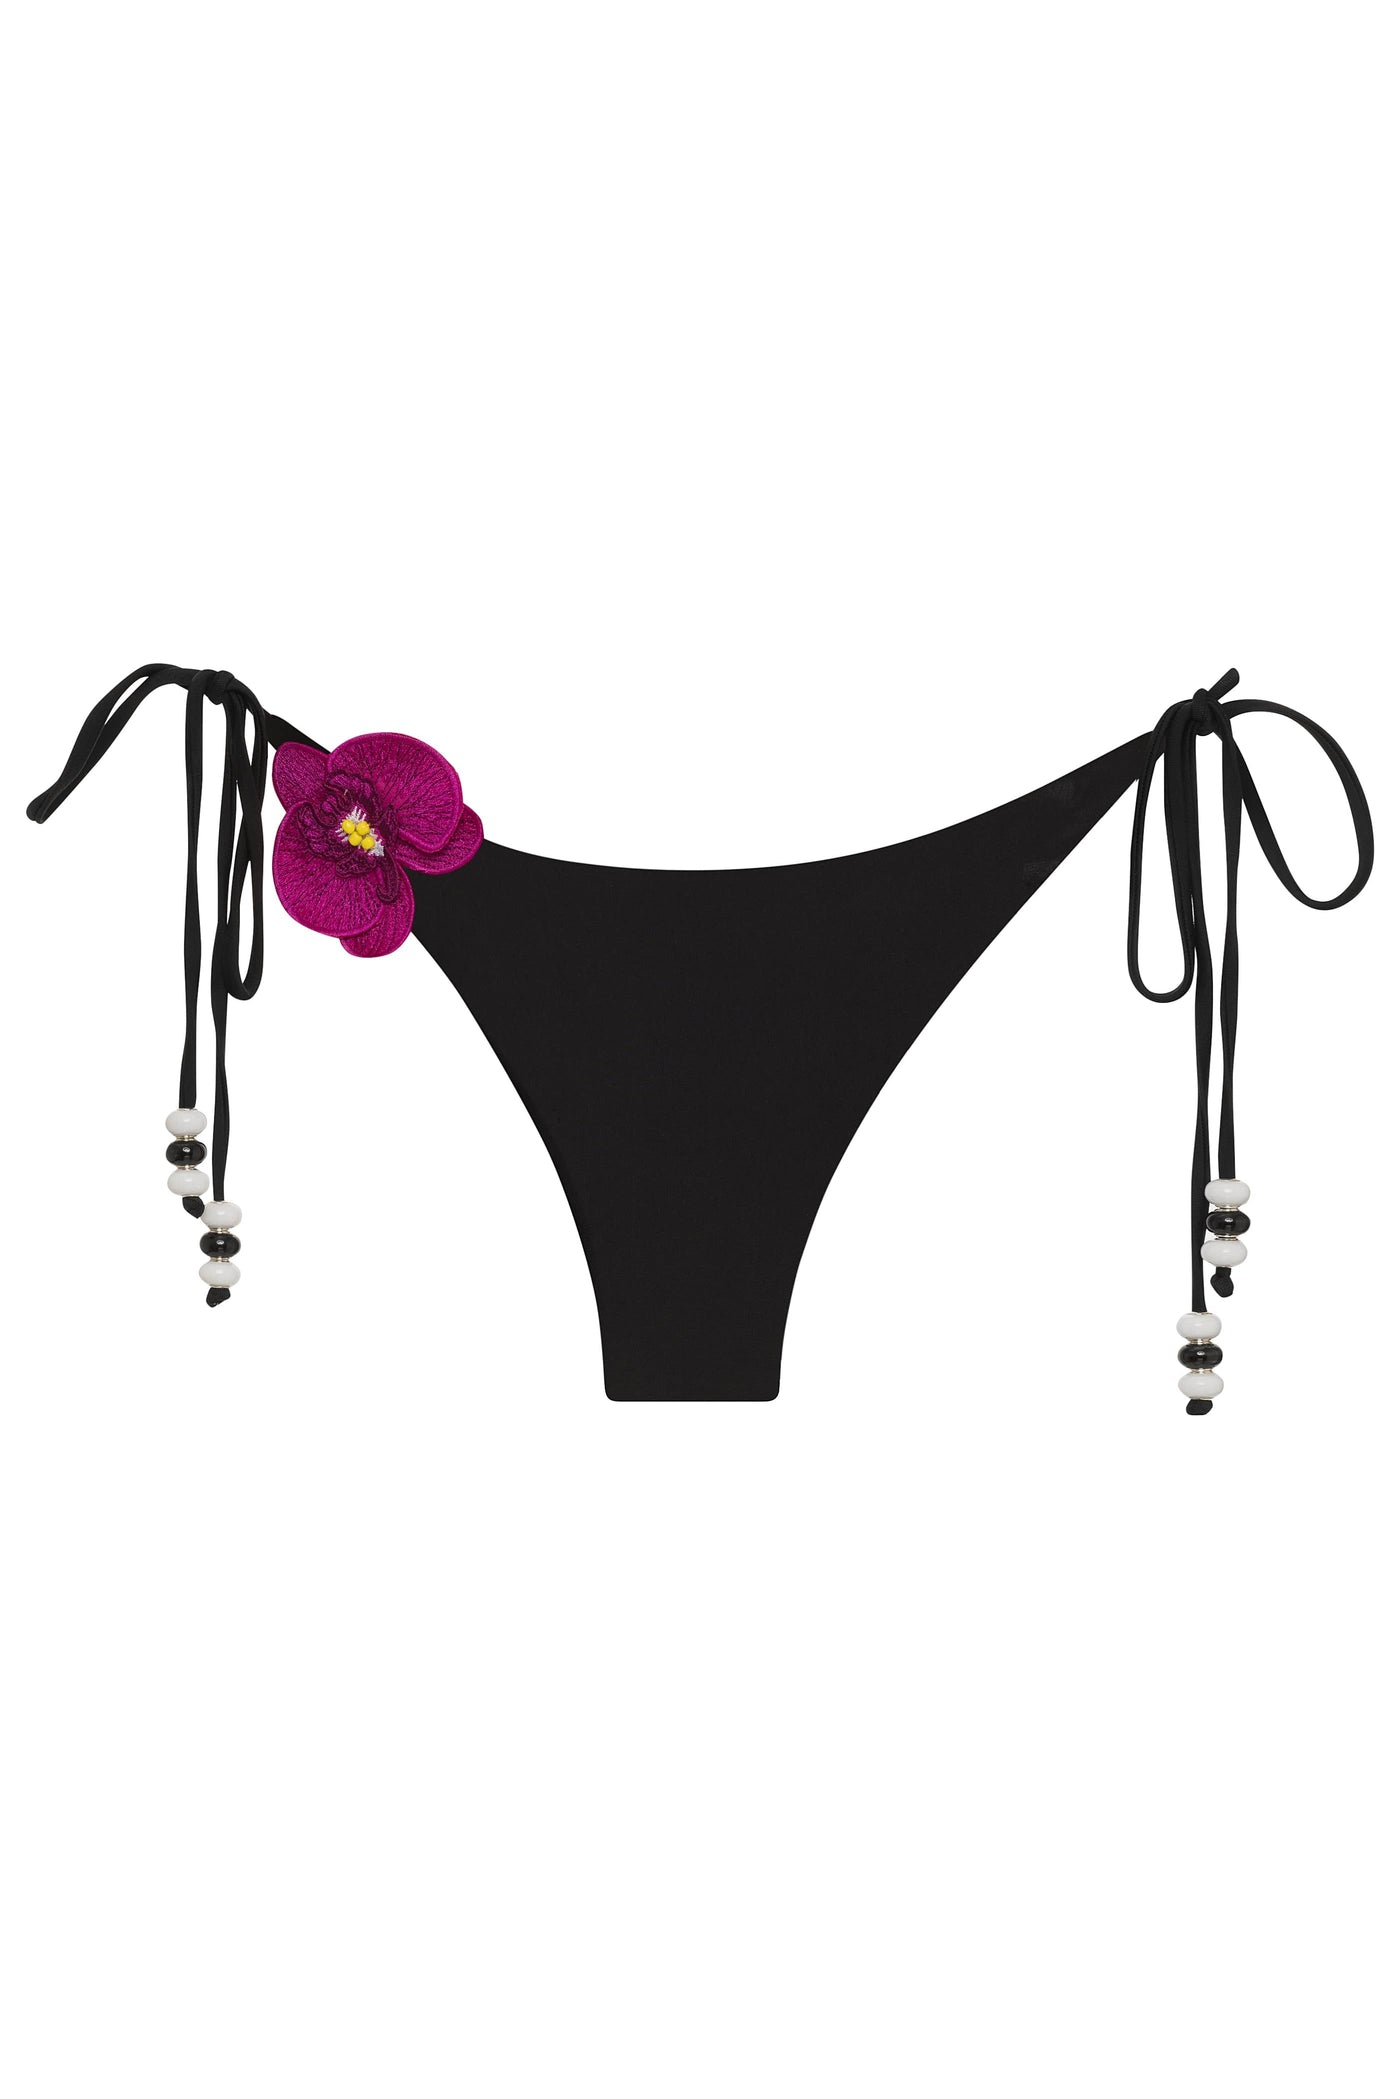 Black / XS Lycaste Black & White Stripe w/ Embroidered Orchid Tie Side Bikini Bottom 2022 Nikoza Swimwear Lycaste Black White Stripe Tie Side Bottom Olga Nikoza Swimwear